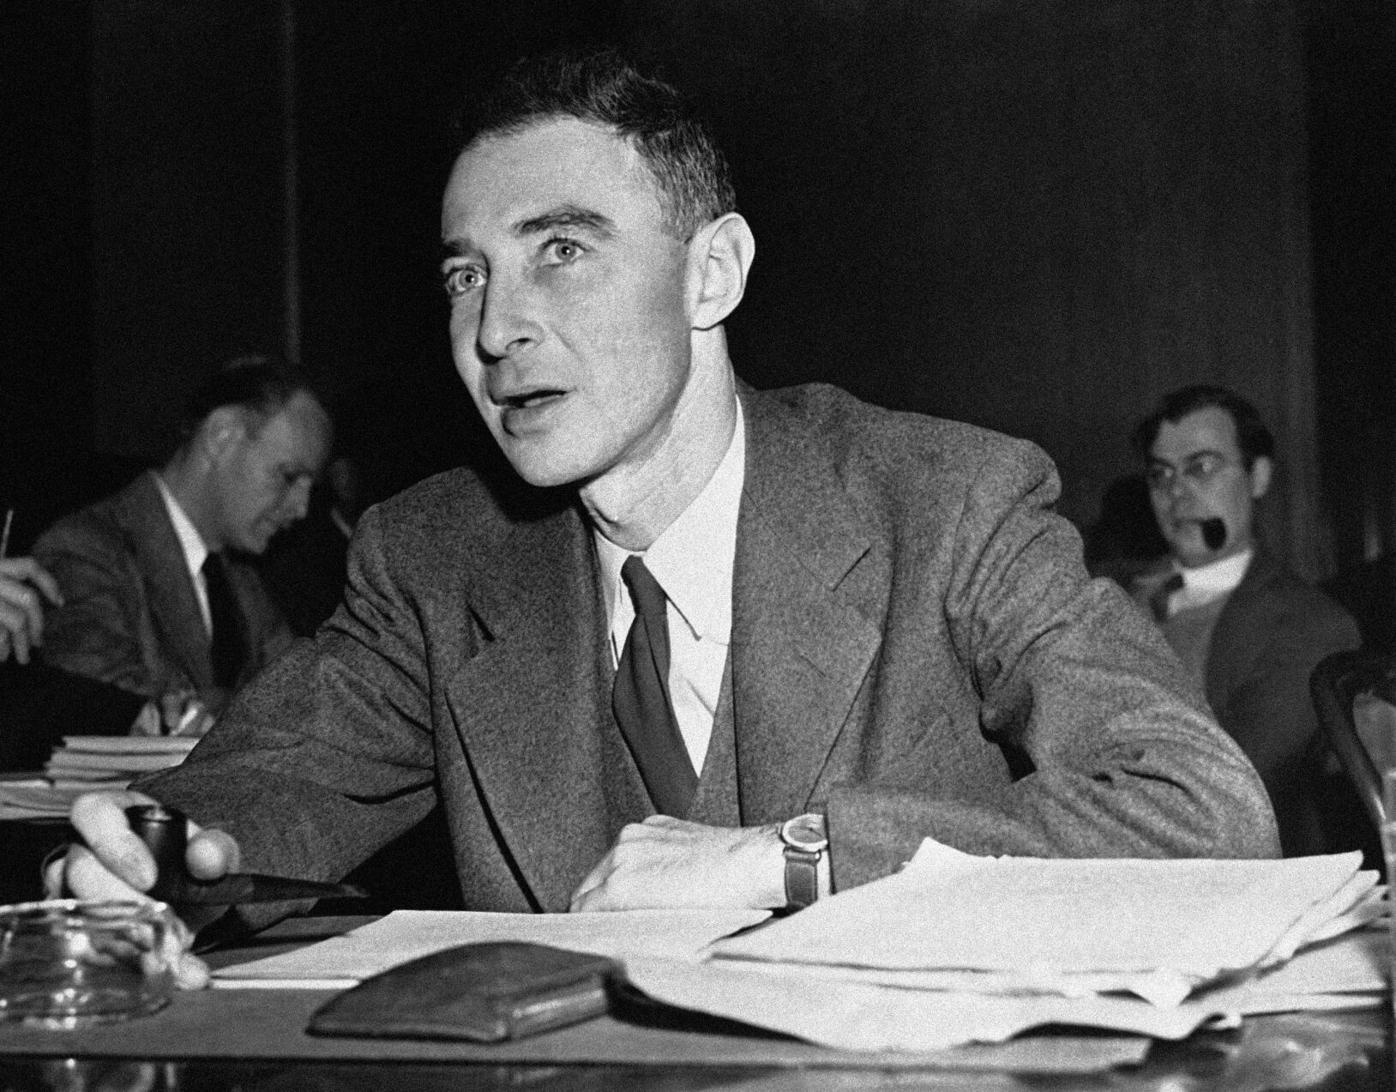 Washington Julius Oppenheimer